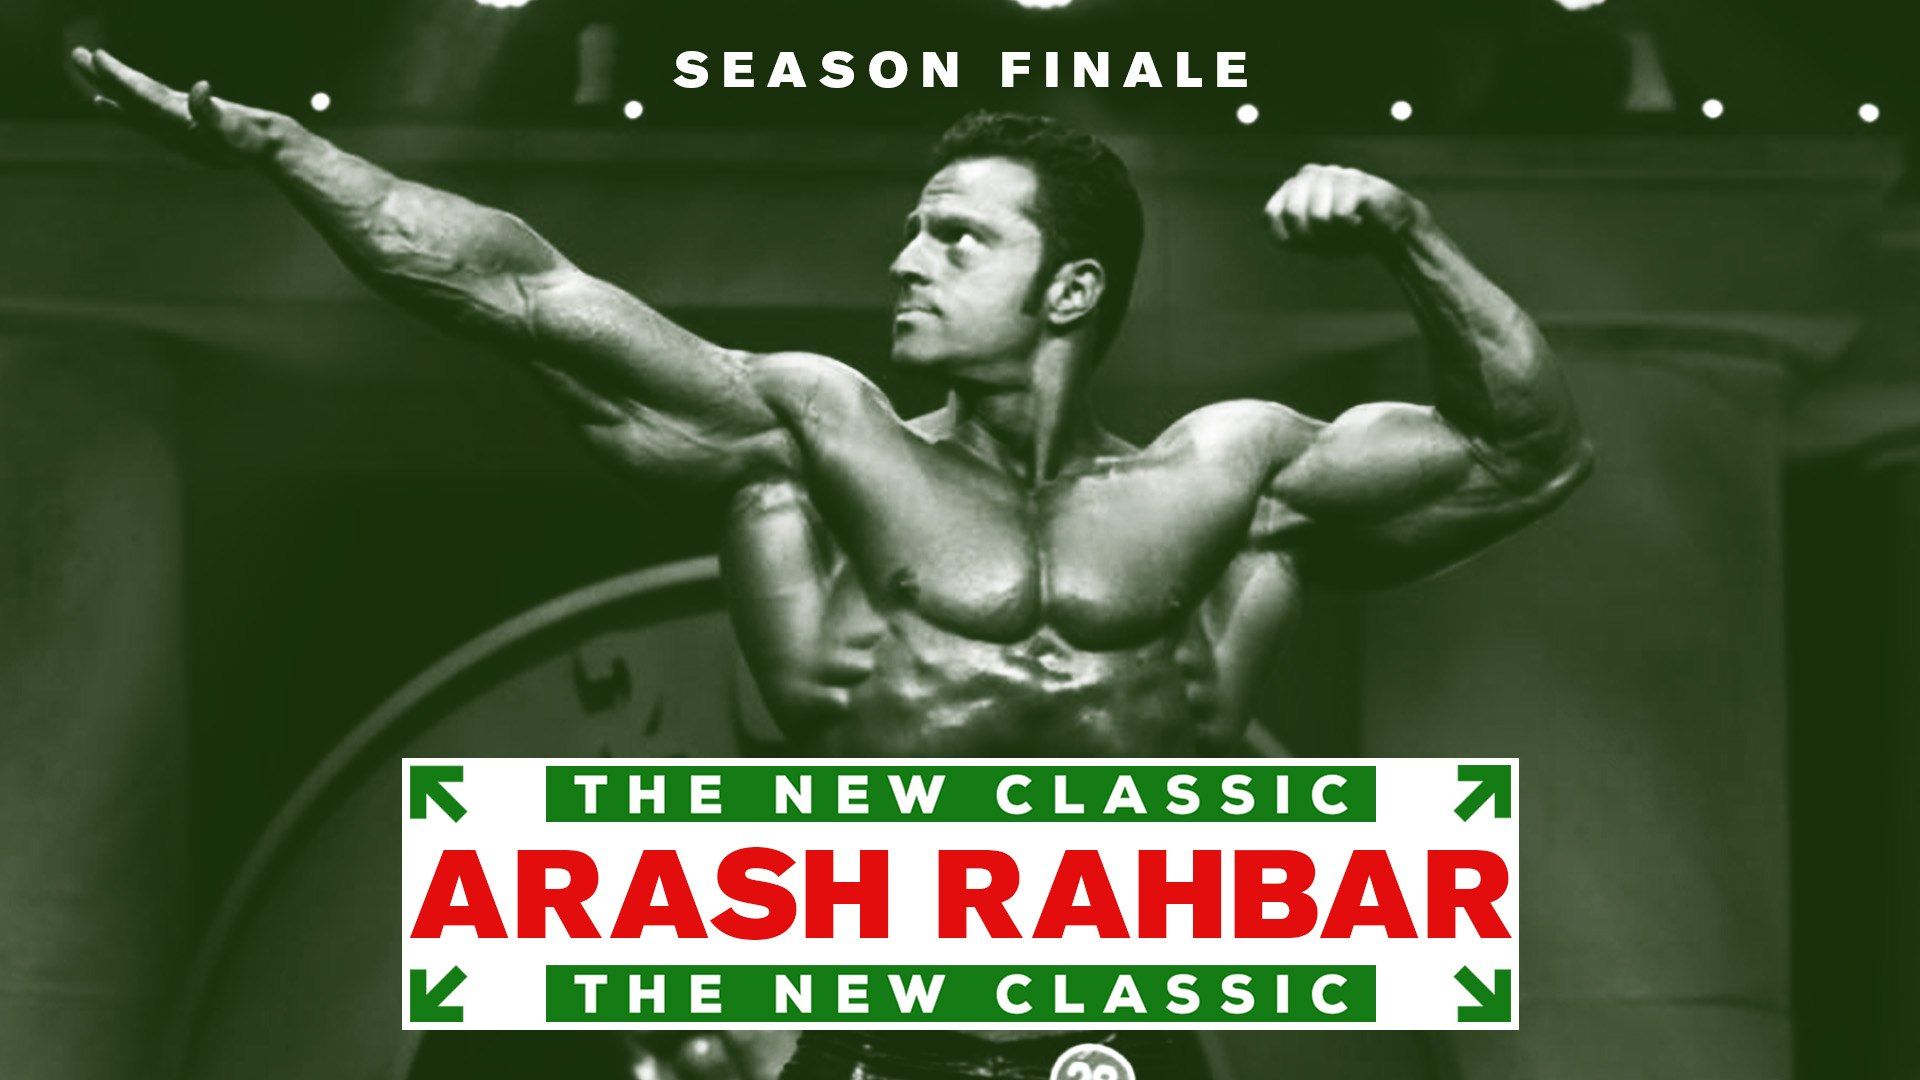 Episode 6: Arash Rahbar's Fate At The Arnold Classic. Arash